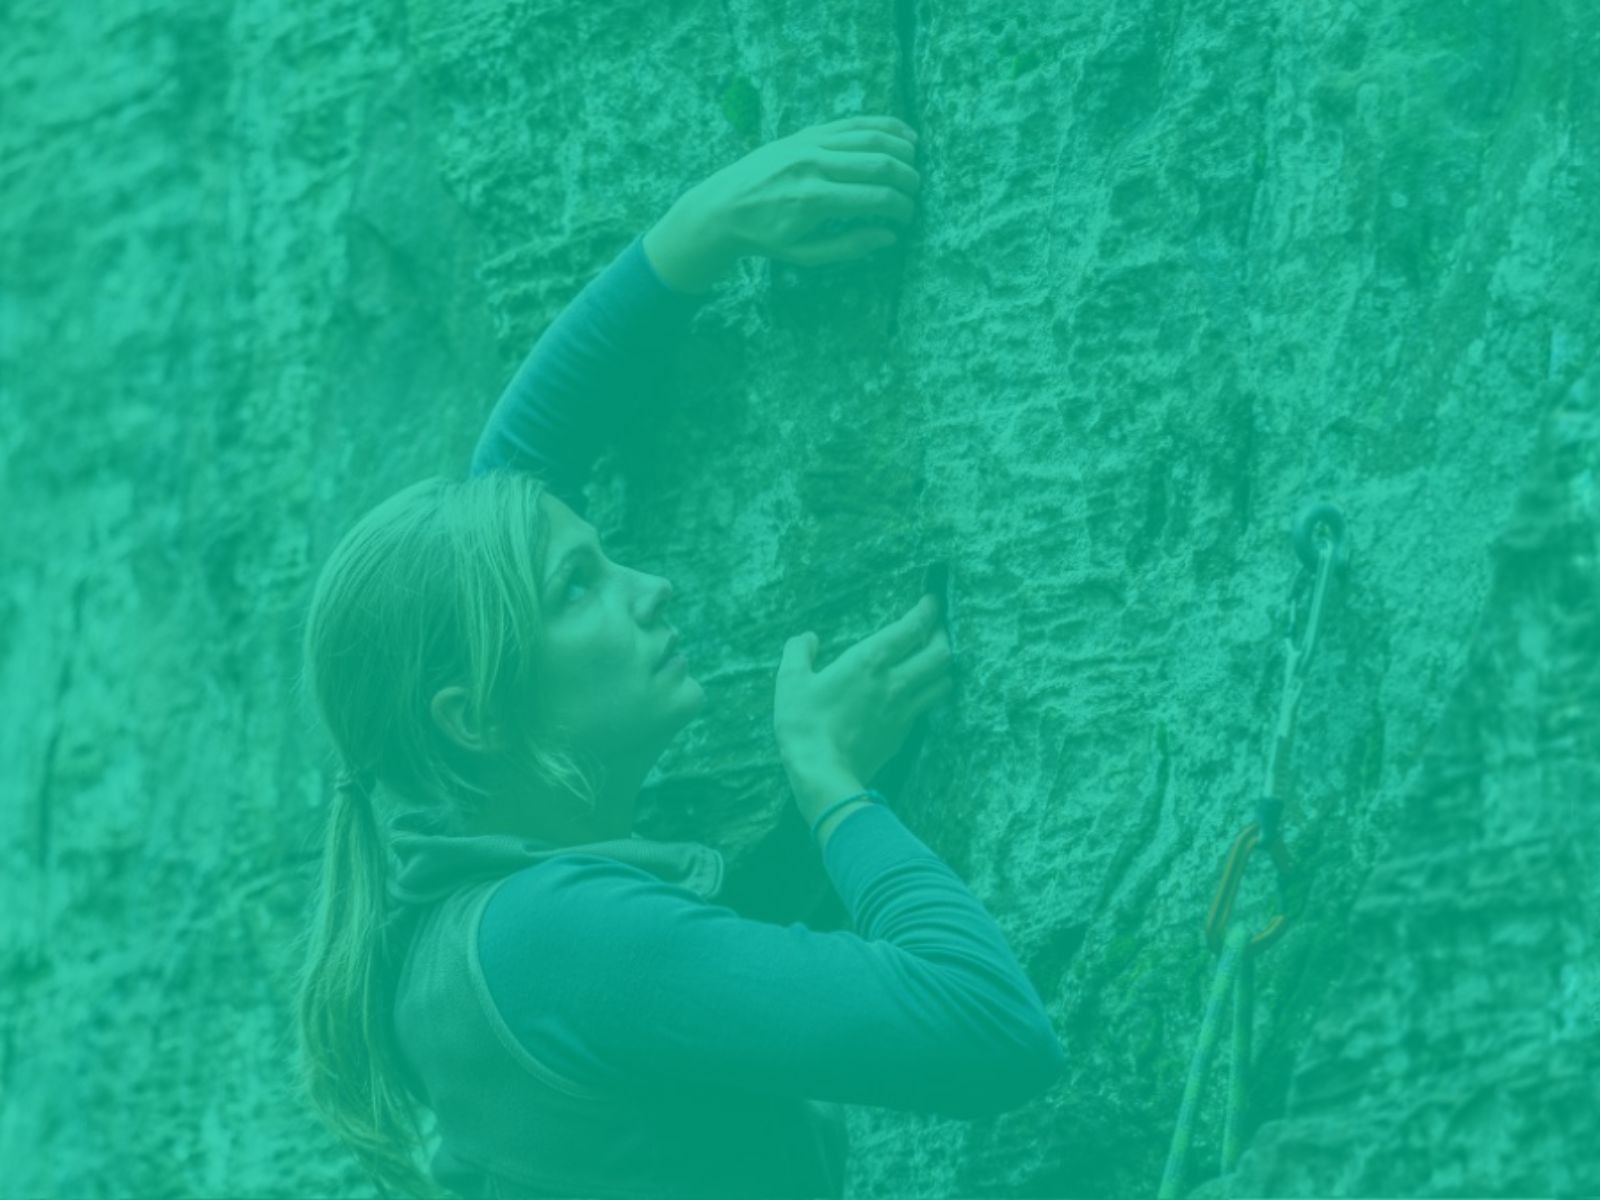 Frau beim Klettern am Fels türkies überlagert